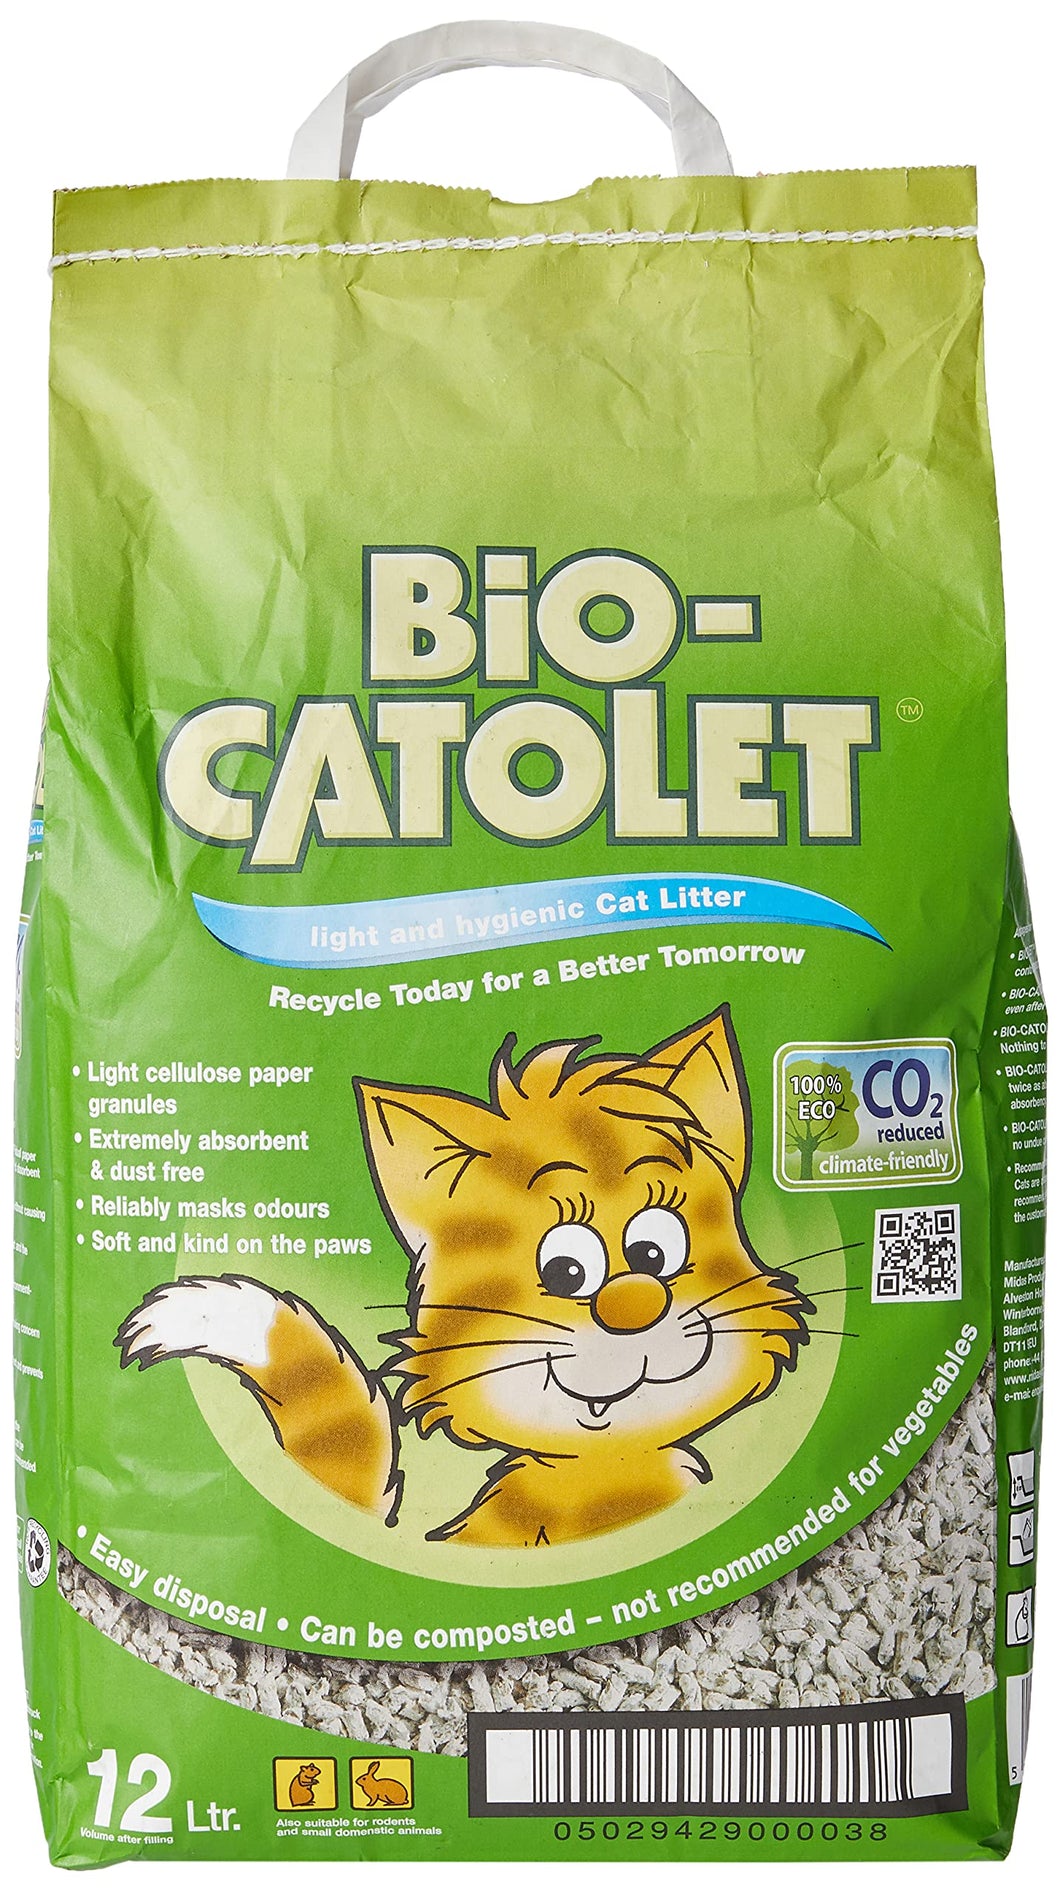 BIO CATOLET Cat Litter